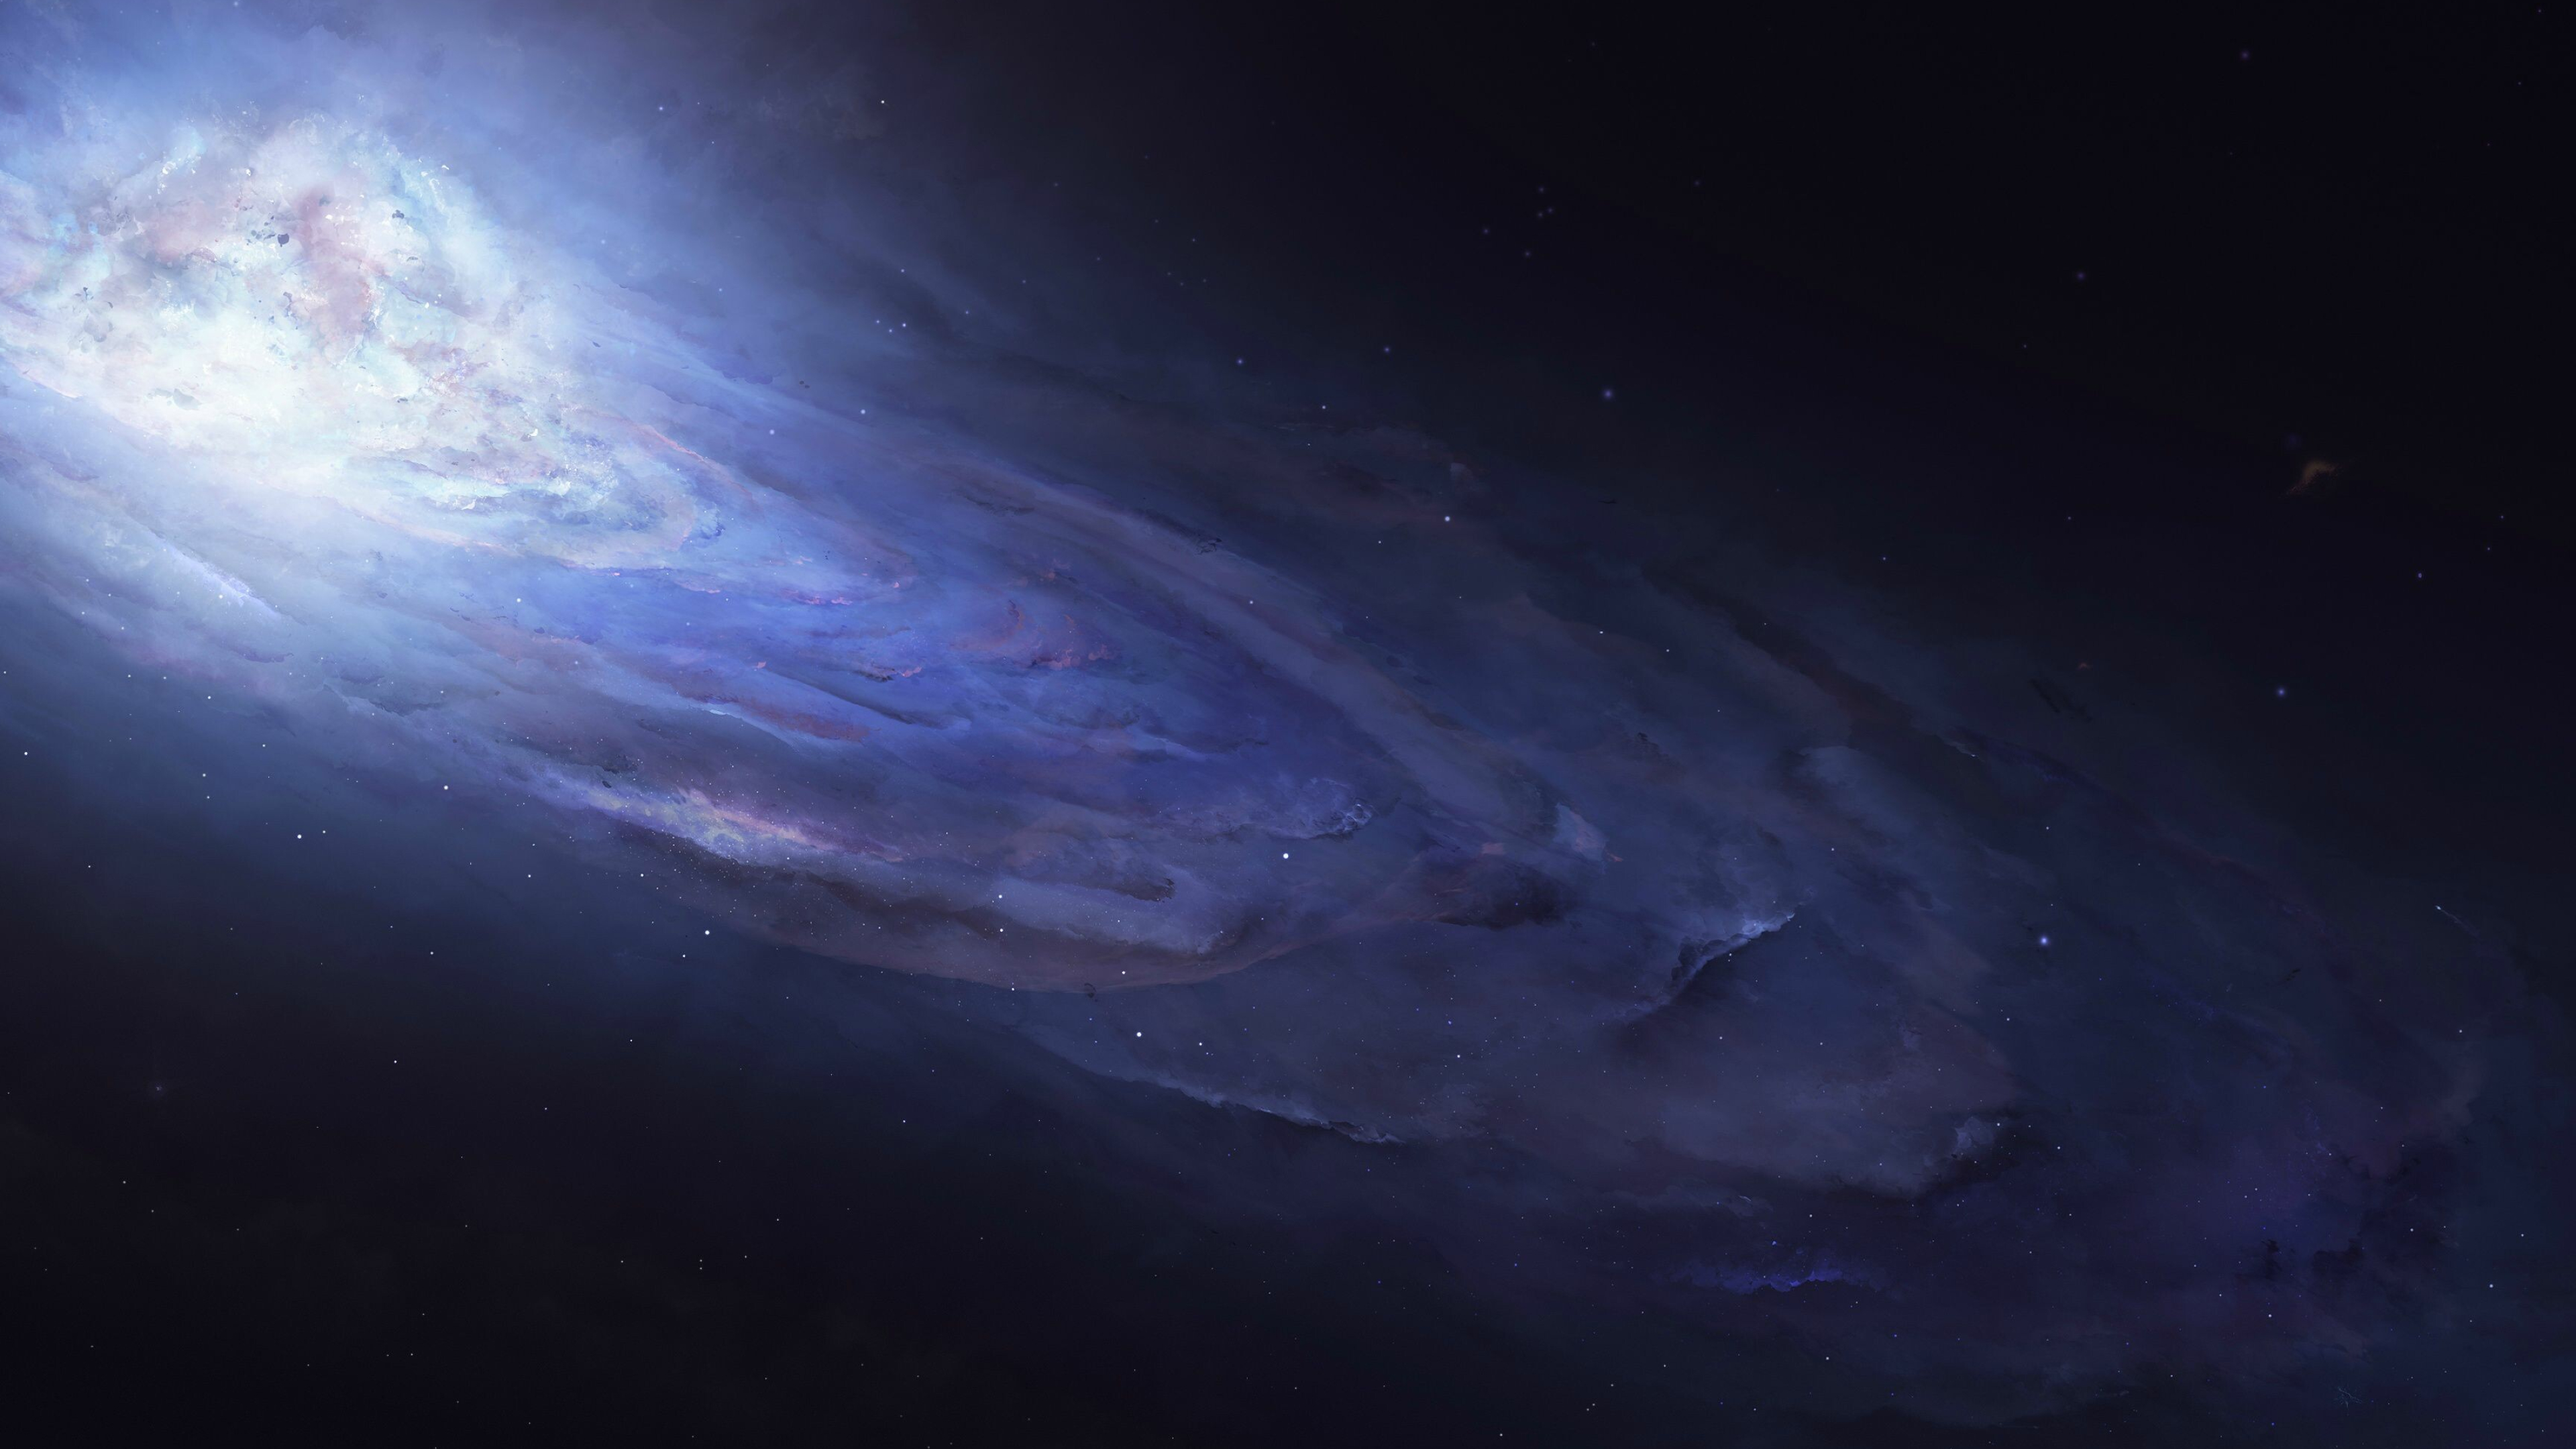 Outer Space: Intergalactic expanse, Gravity, Cosmic, Galactic, Nova. 3840x2160 4K Wallpaper.